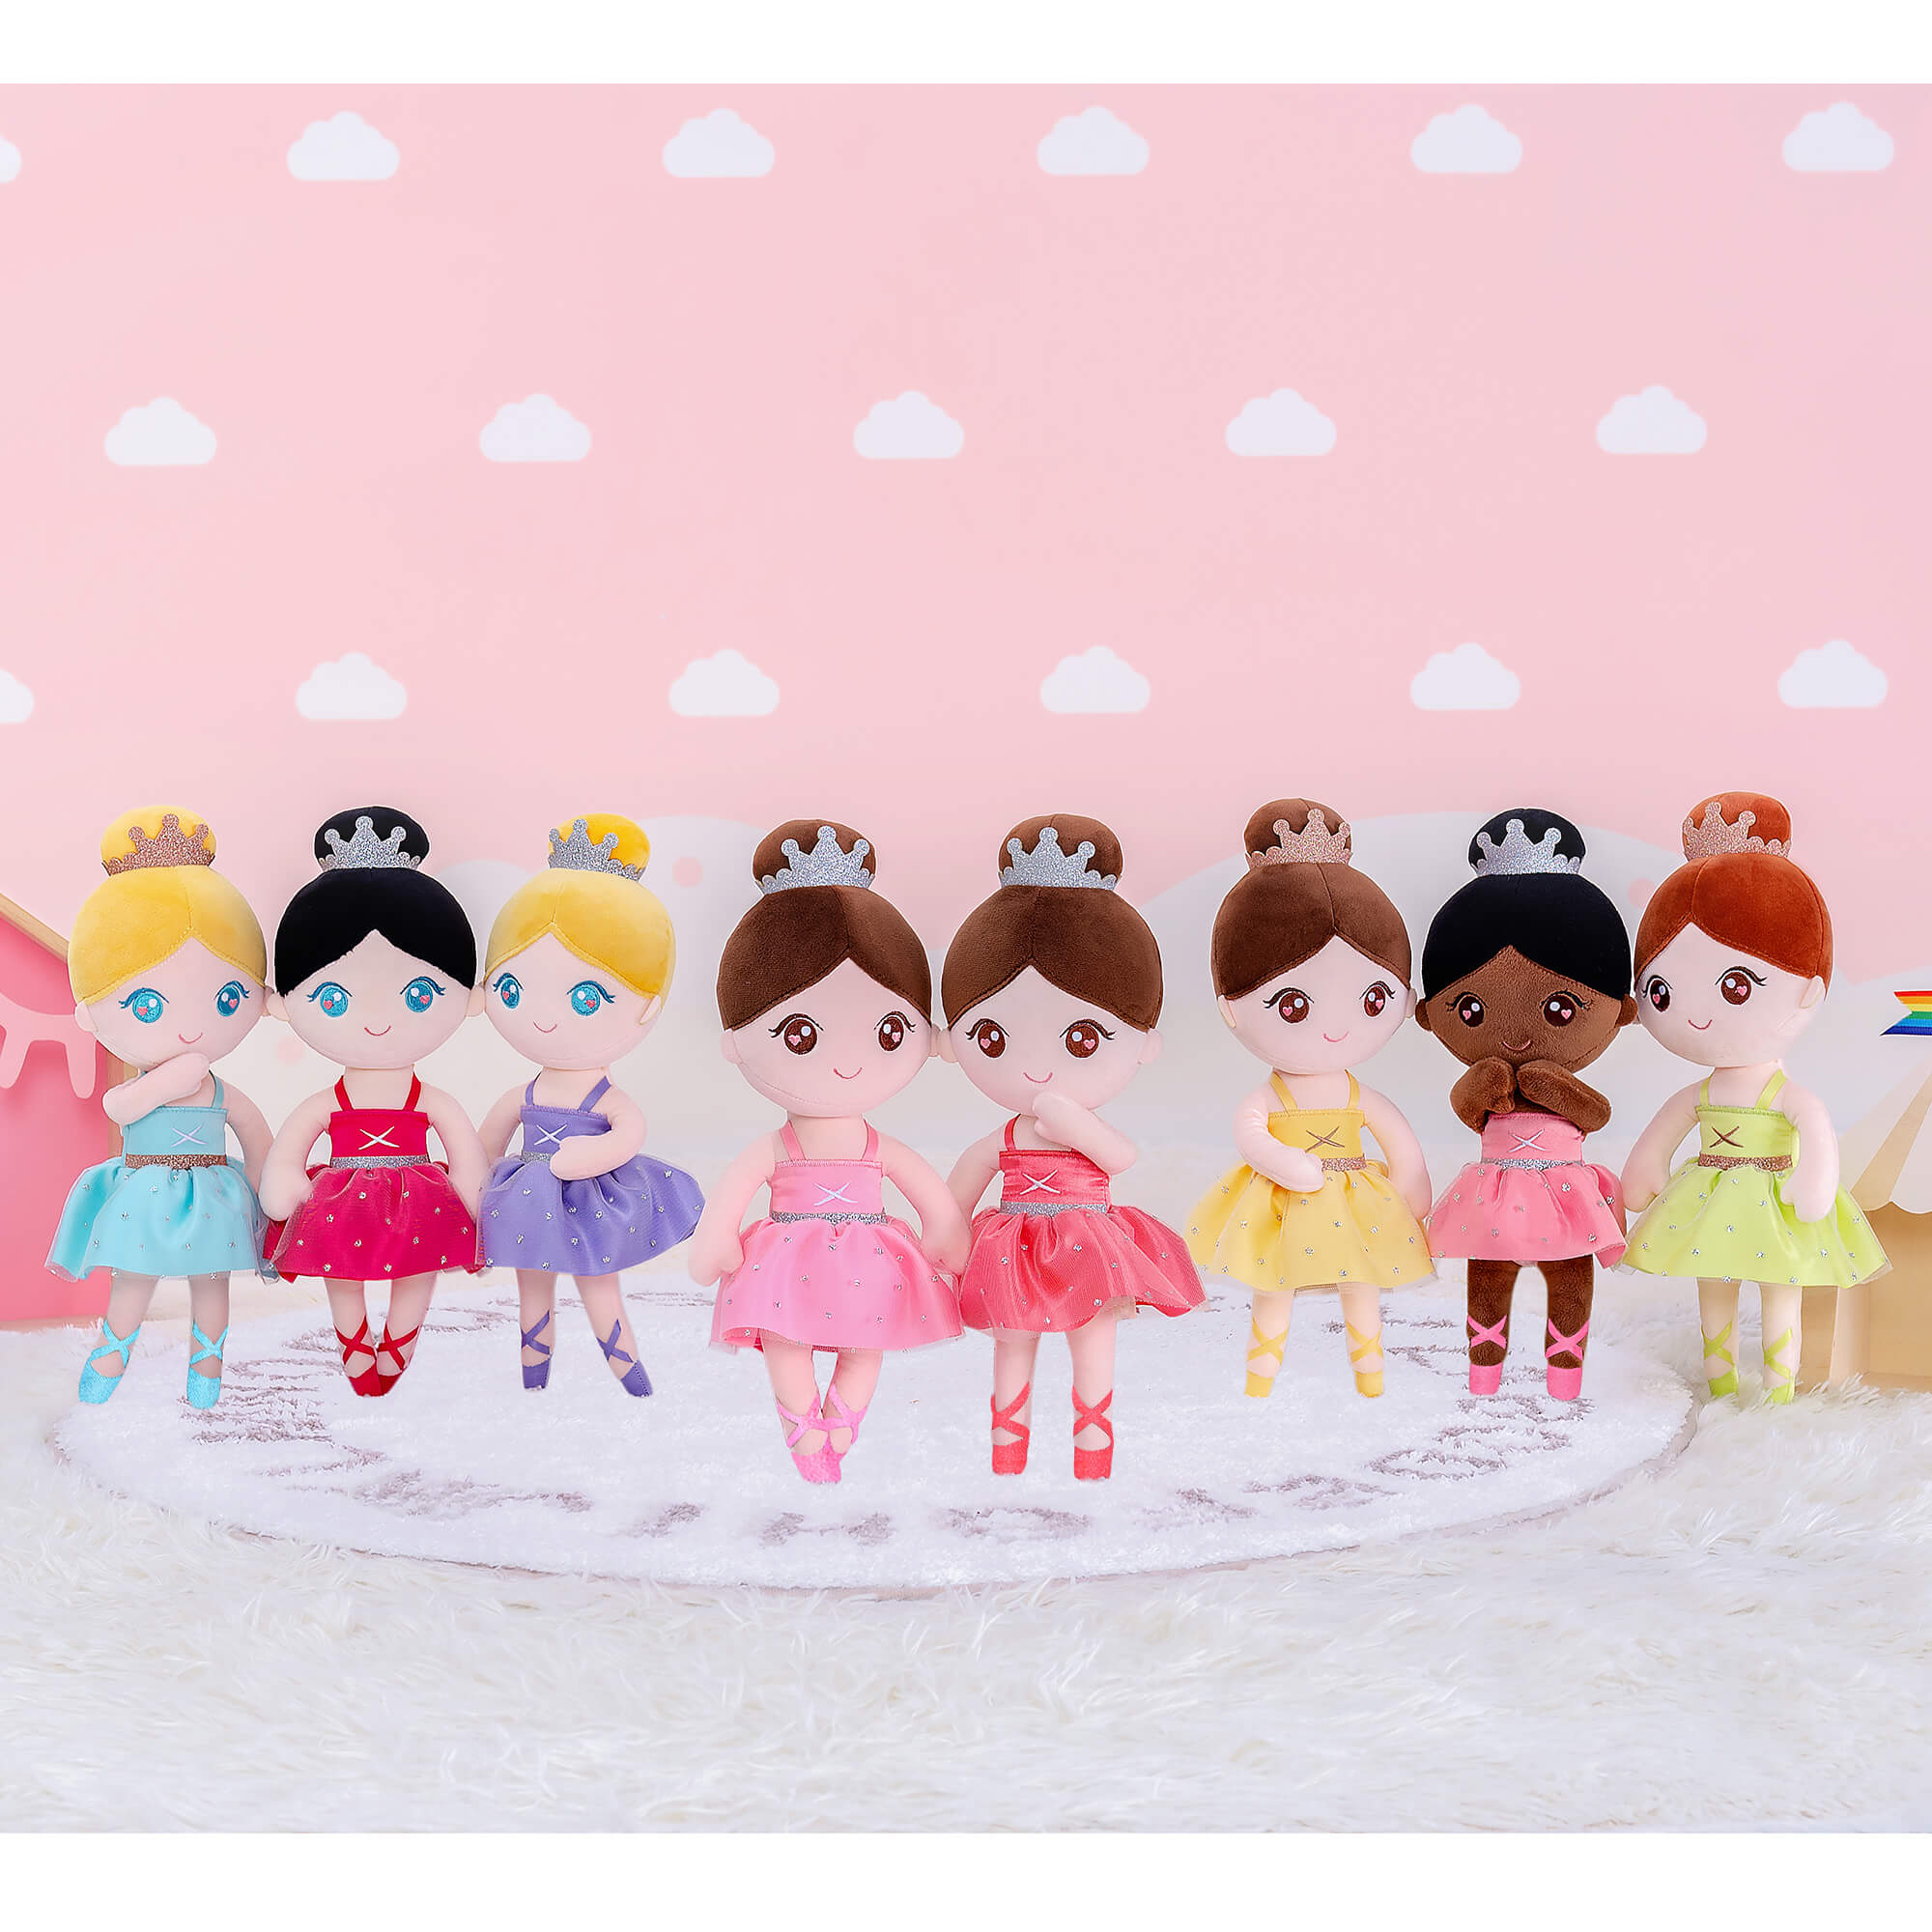 Gloveleya 13-inch Personalized Plush Dolls Ballerina Series Pink Ballet Dream